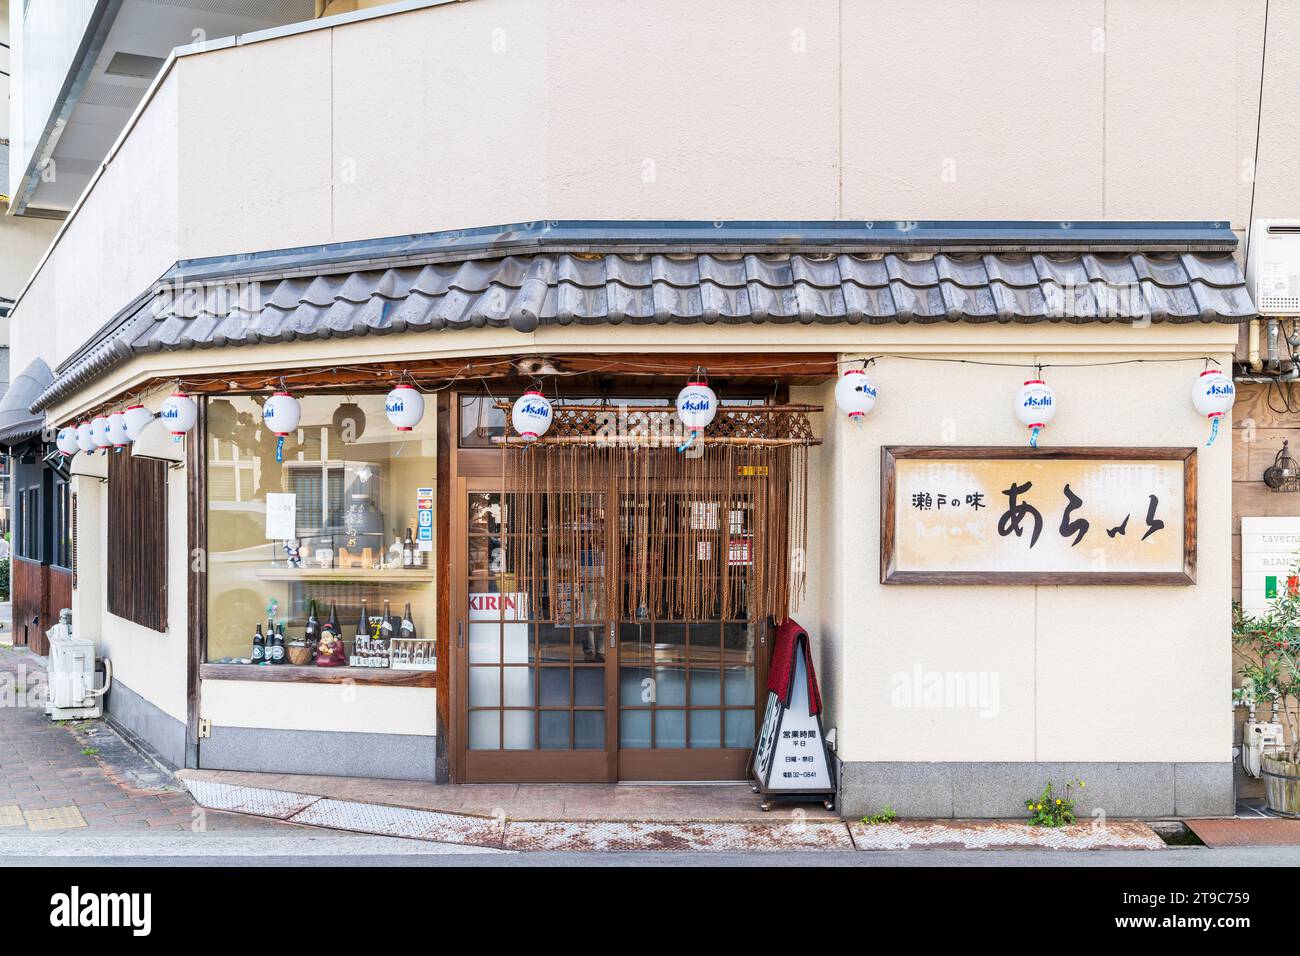 Exterior of Japanese restaurant in Fukuyama. Asahi lanterns hanging above the doorway and shuttered window. Modern facade. Daytime. Stock Photo